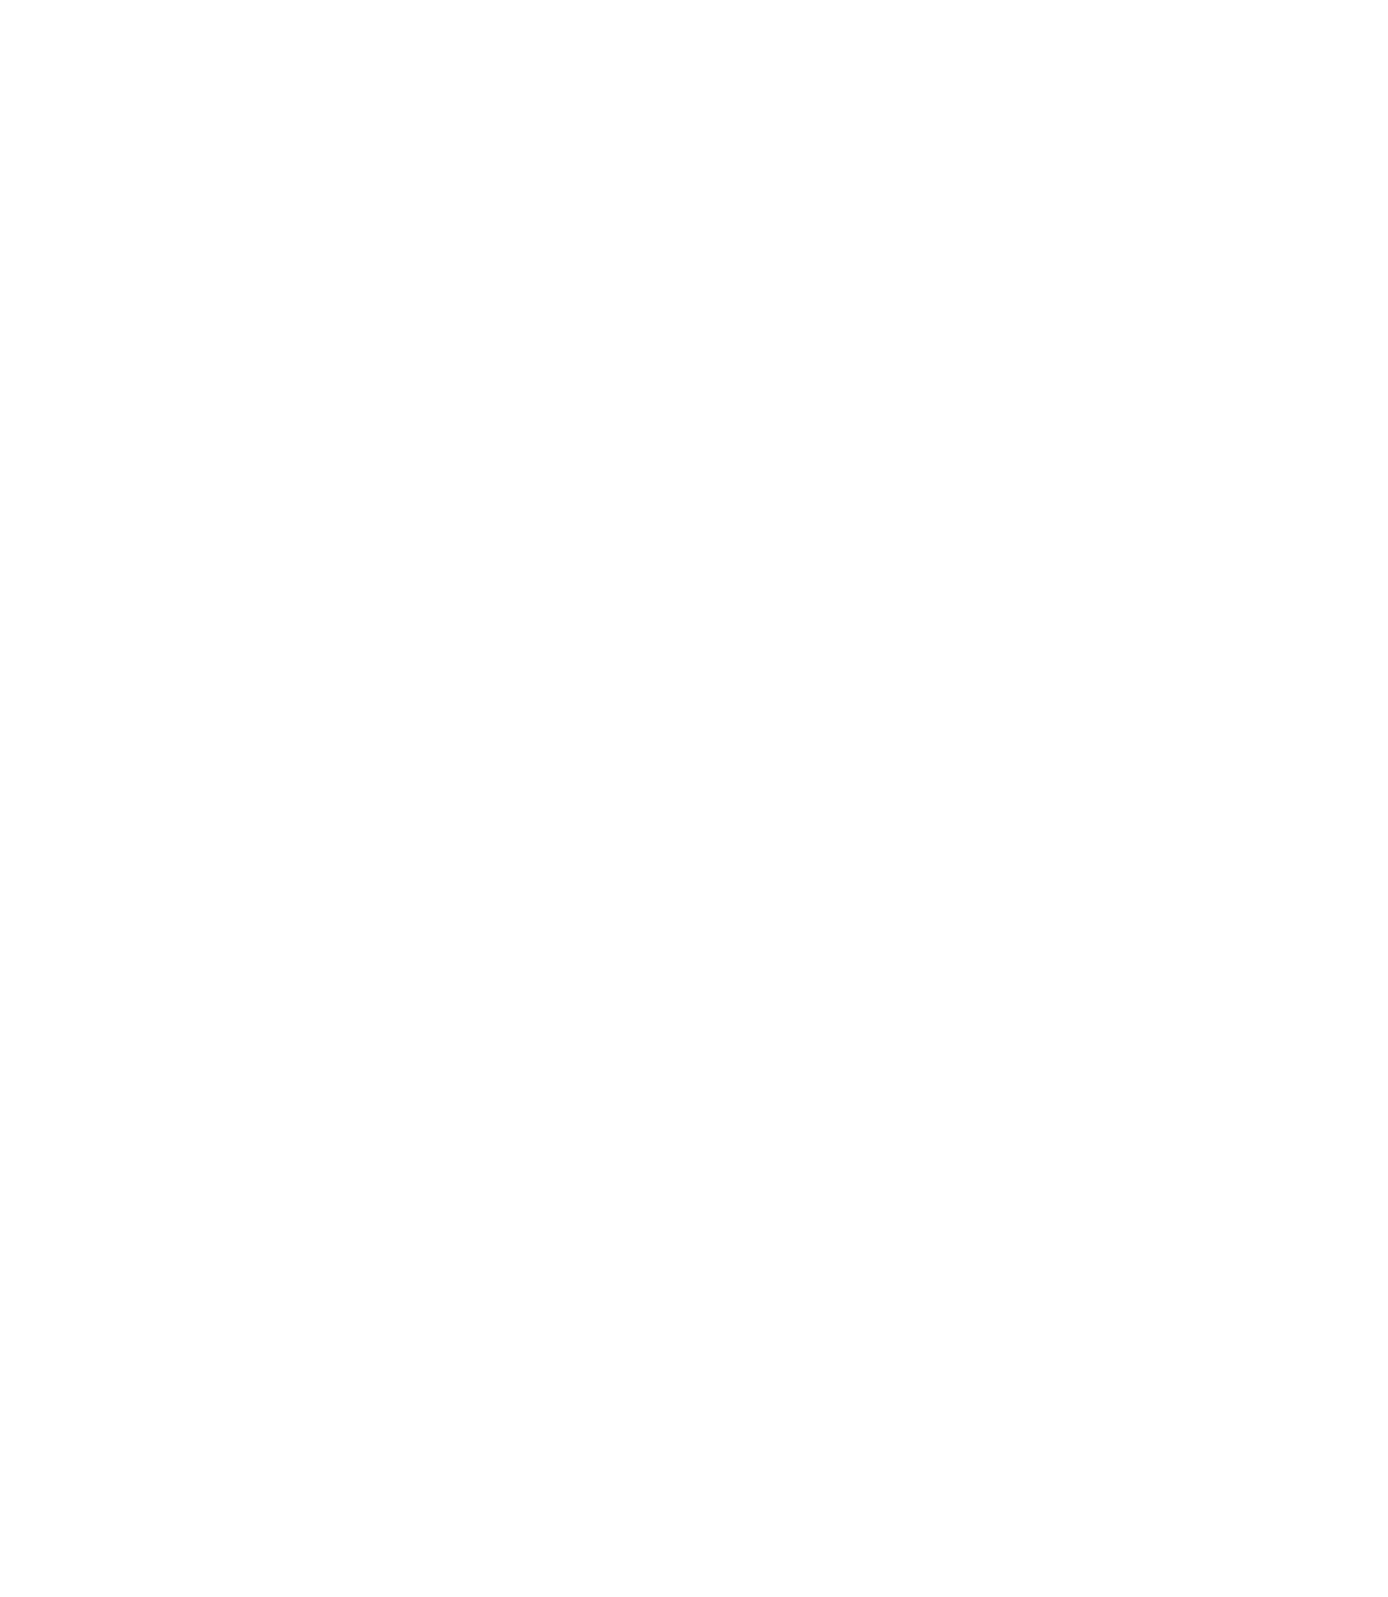 Farmers & Merchants Bancorp logo for dark backgrounds (transparent PNG)